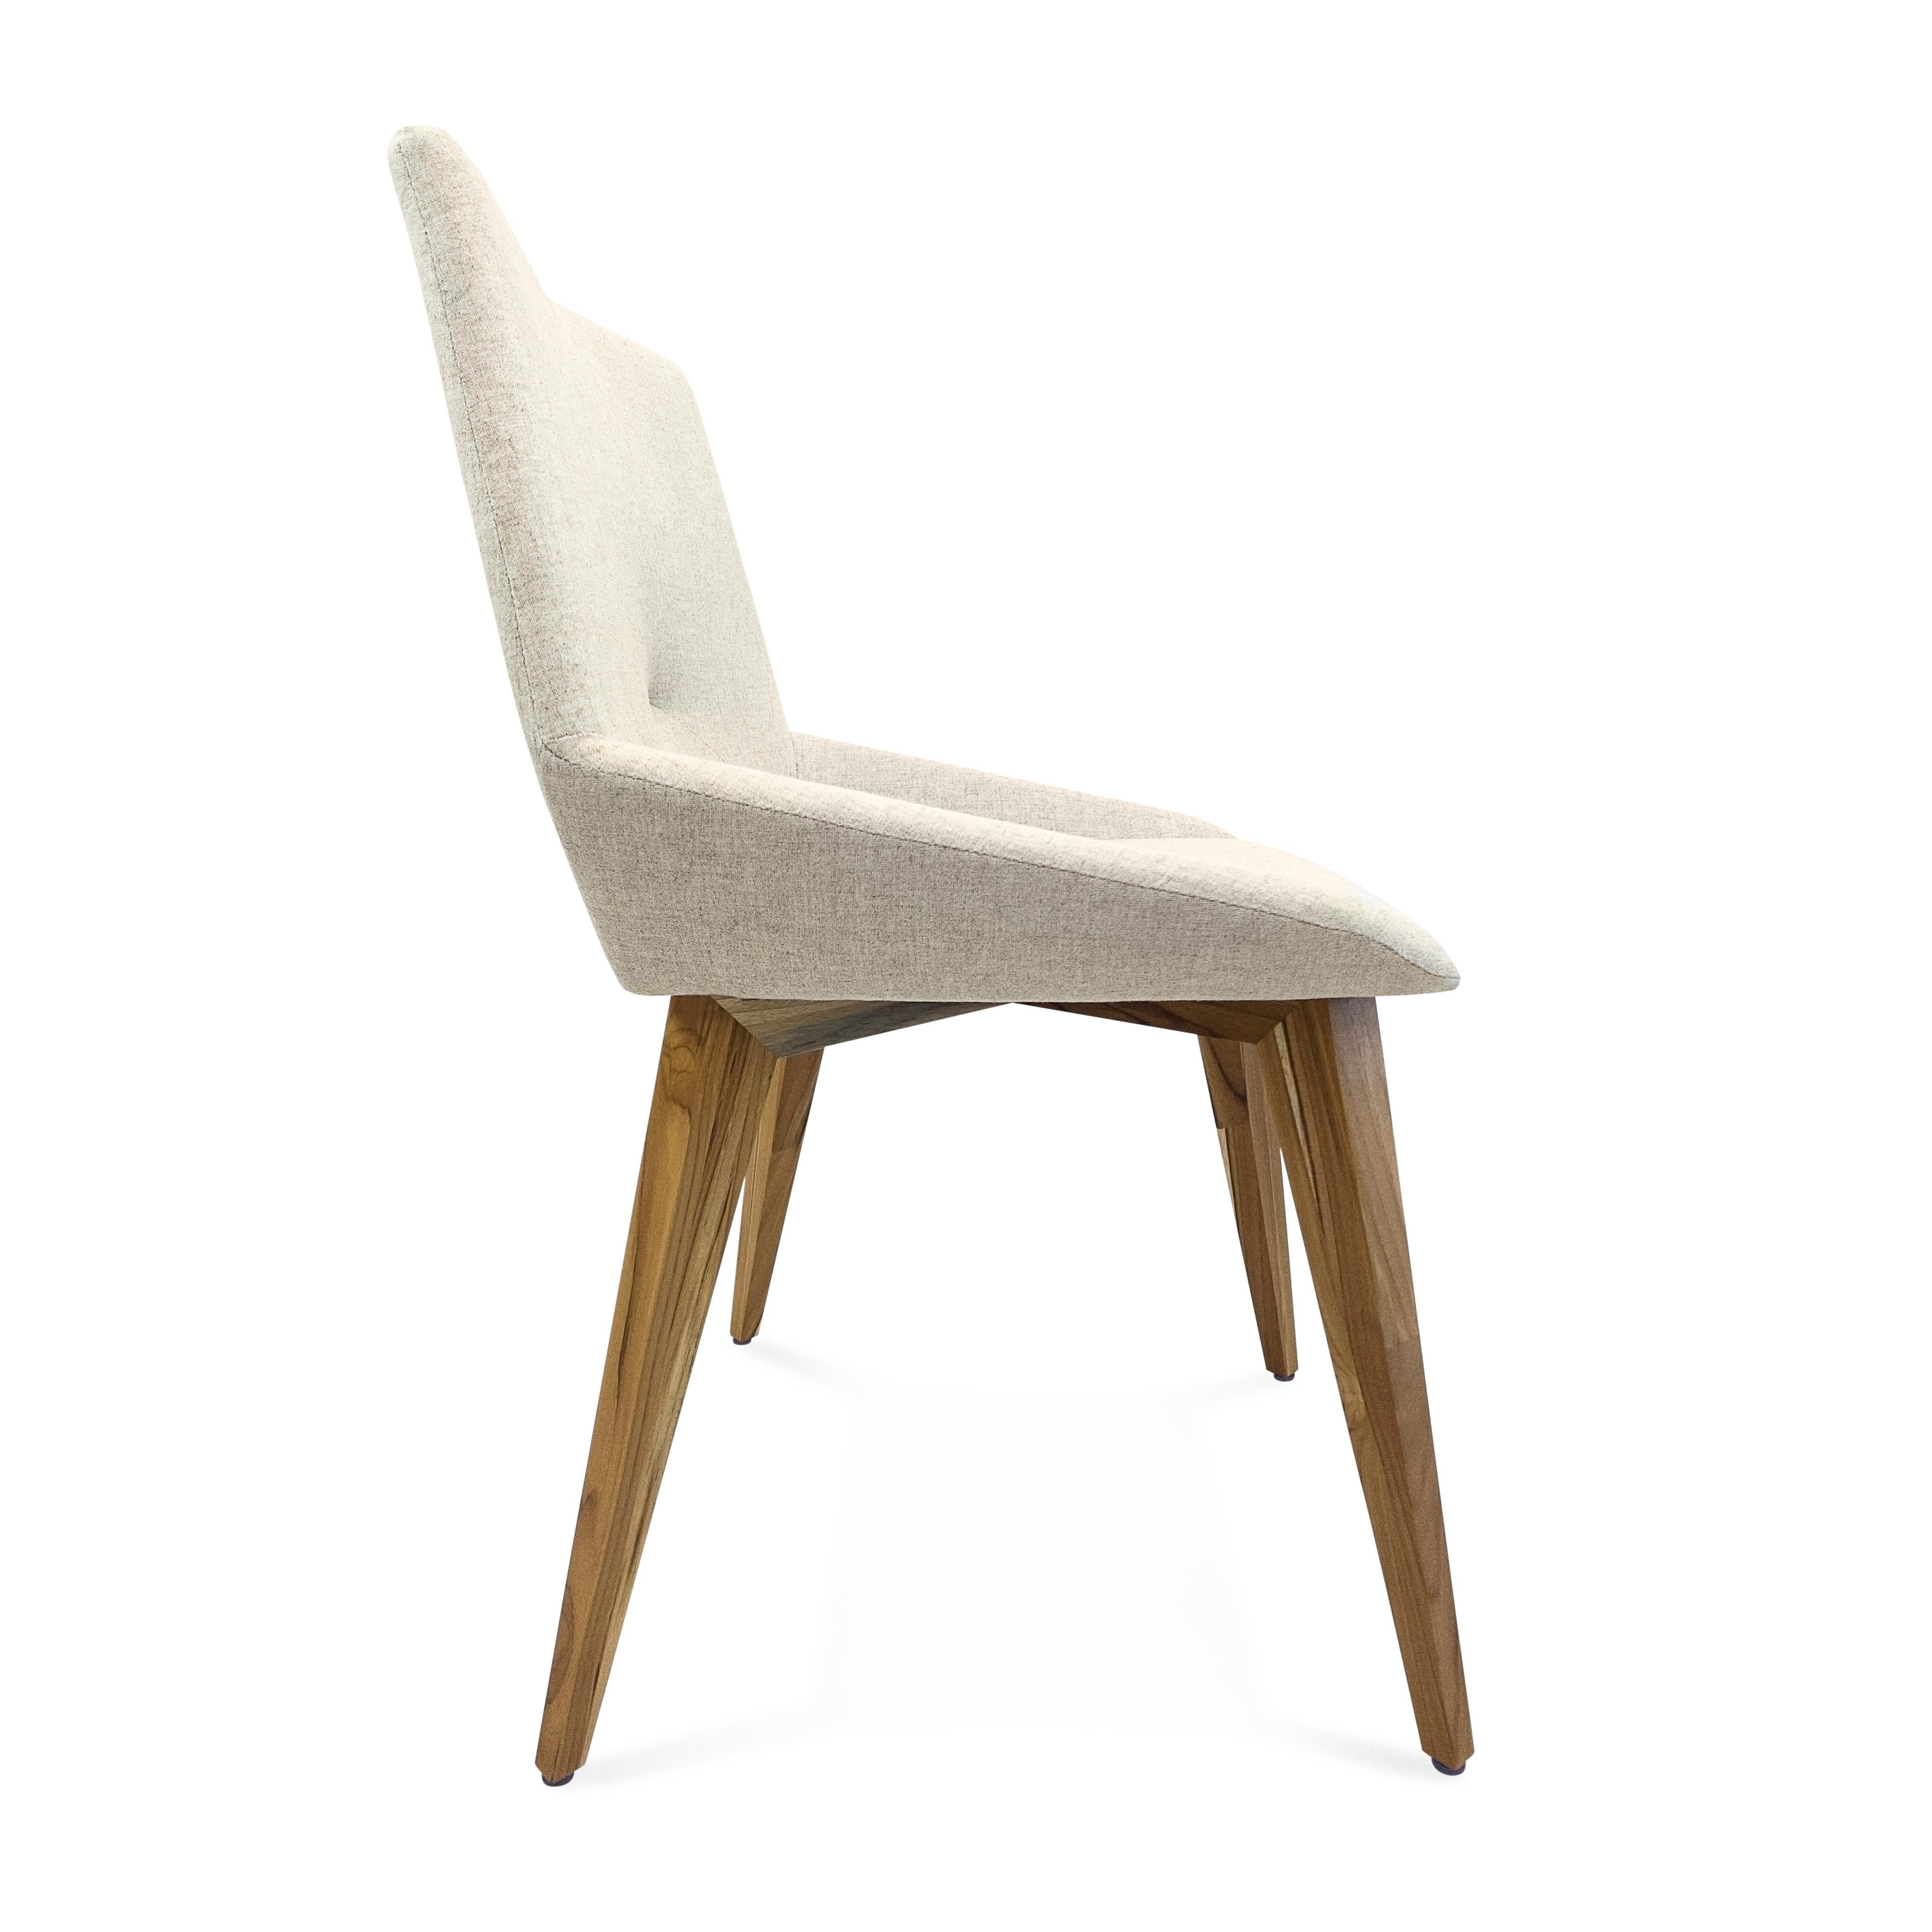 Brazilian Geometric Cubi Dining Chair in Teak Wood Finish with Oatmeal Fabric Seat For Sale